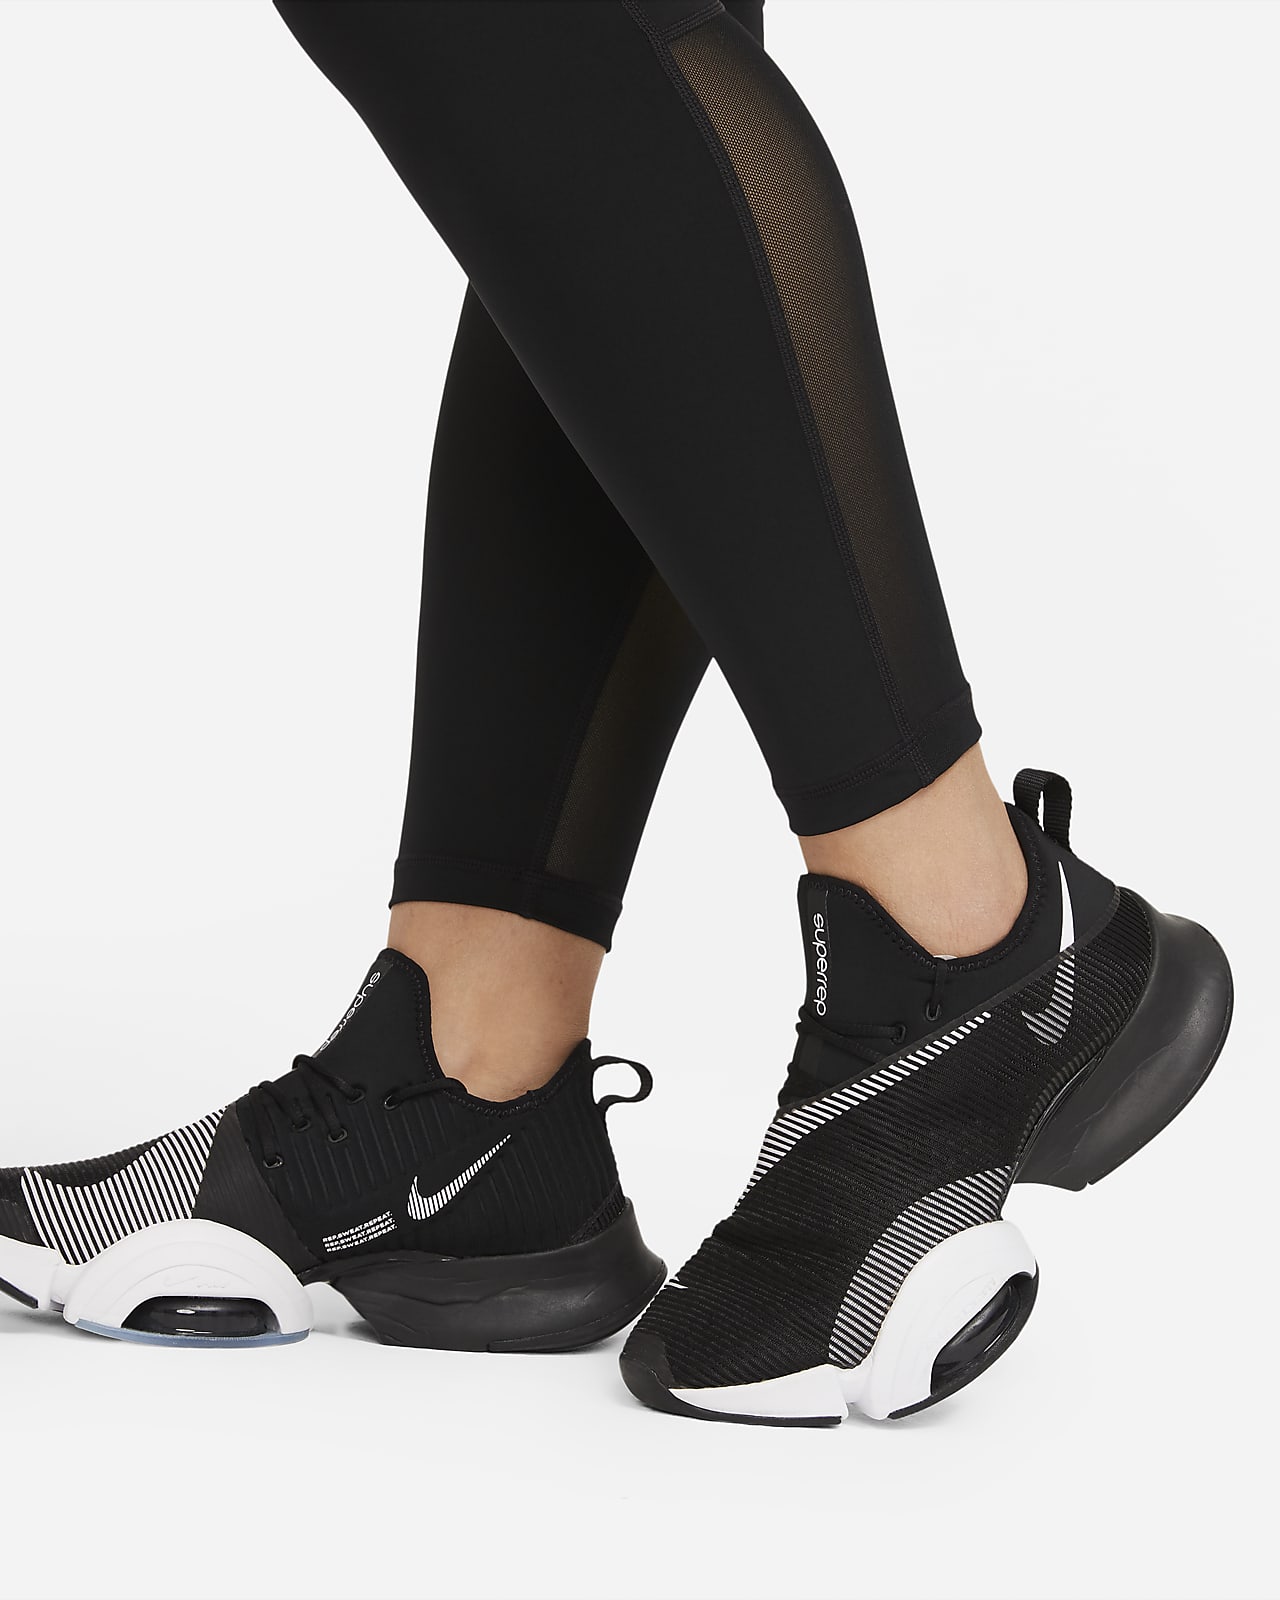 $0 - $74 Plus Size Tights & Leggings. Nike CA